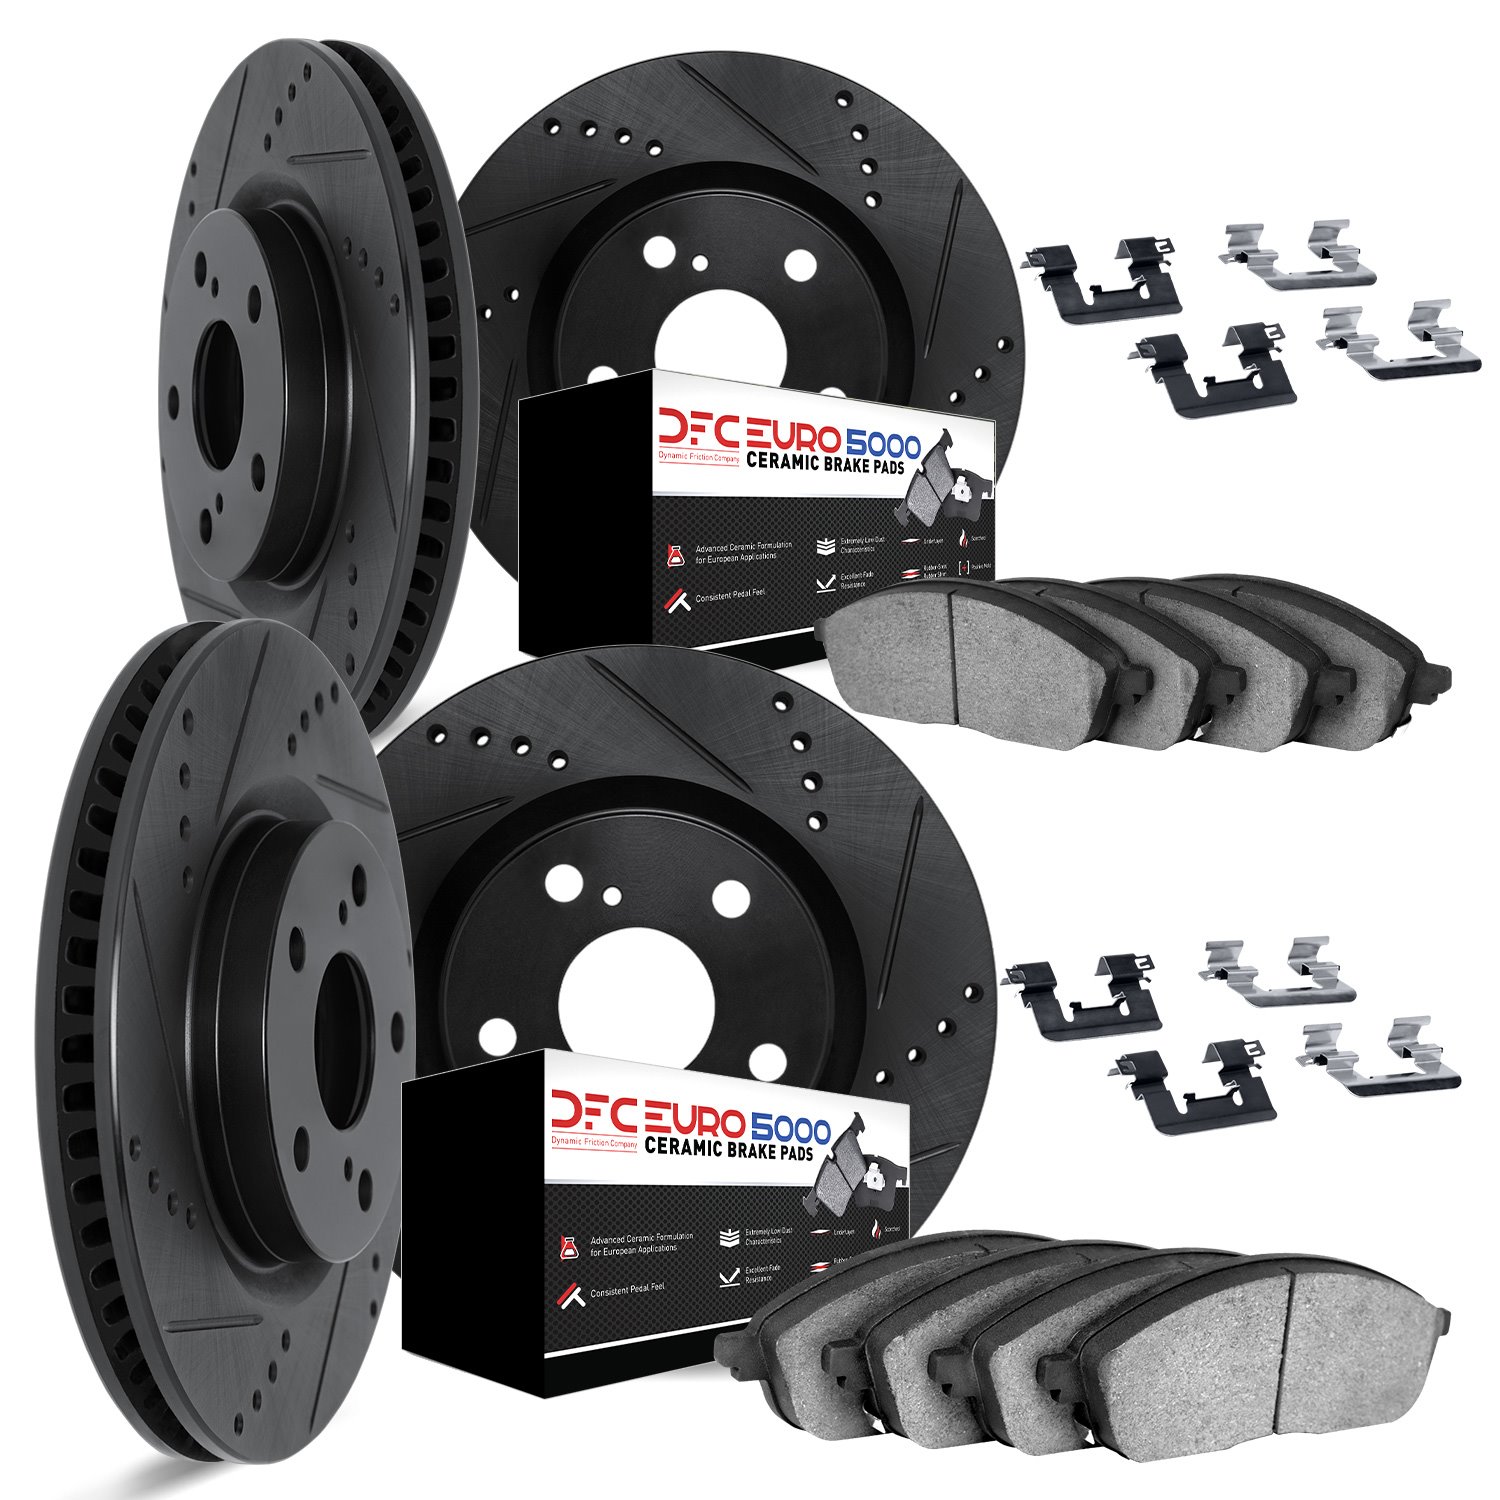 8614-31029 Drilled/Slotted Brake Rotors w/5000 Euro Ceramic Brake Pads Kit & Hardware [Black], 2010-2015 BMW, Position: Front an